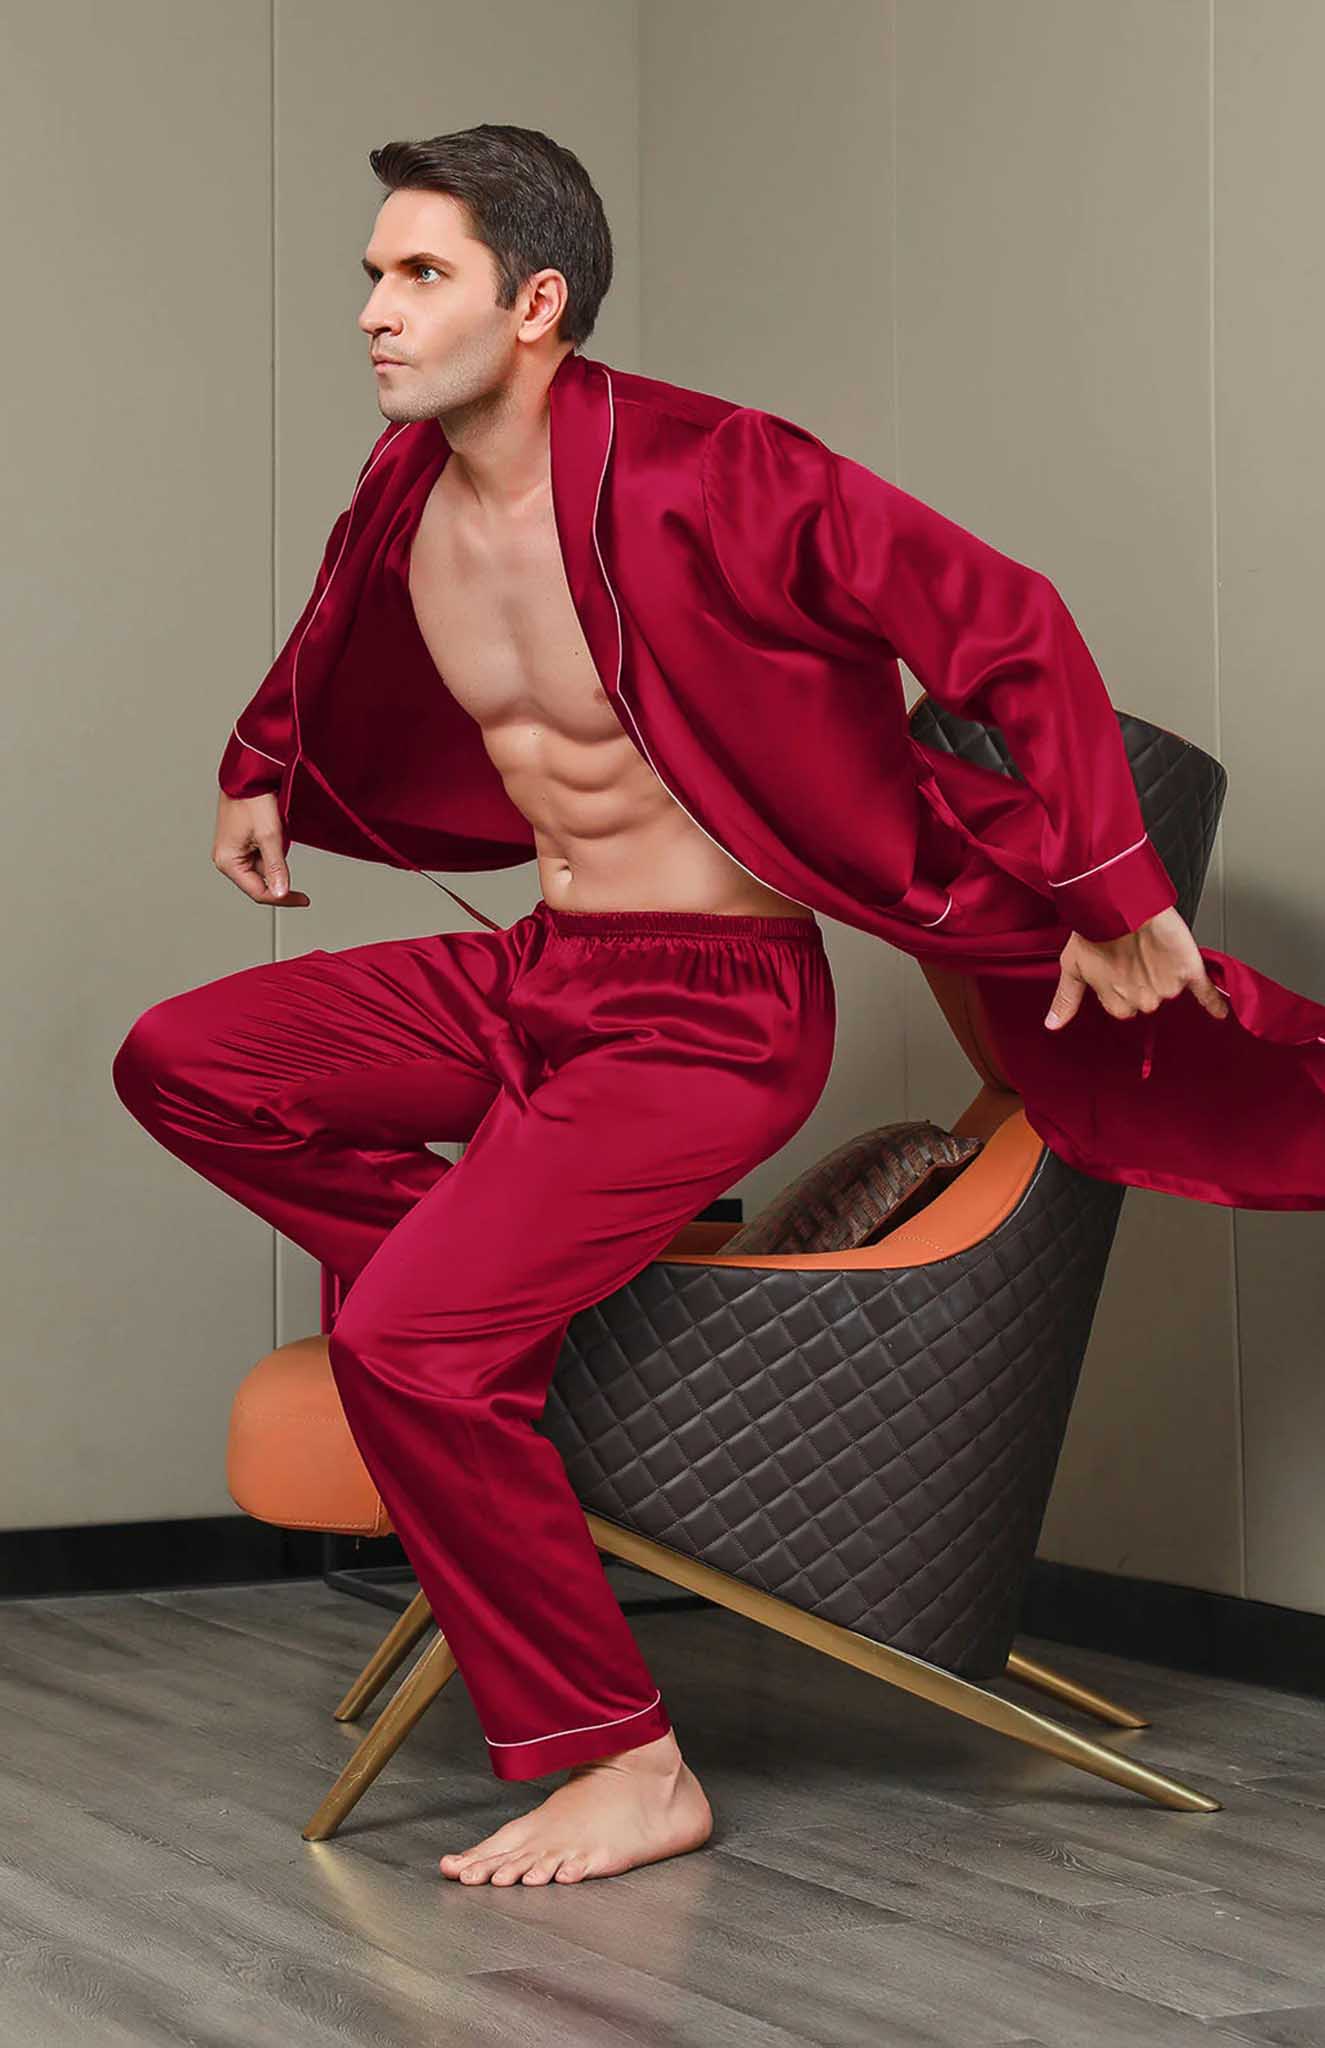 Regal Red Satin Robe and Pyjama - Luxurious Loungewear Collection